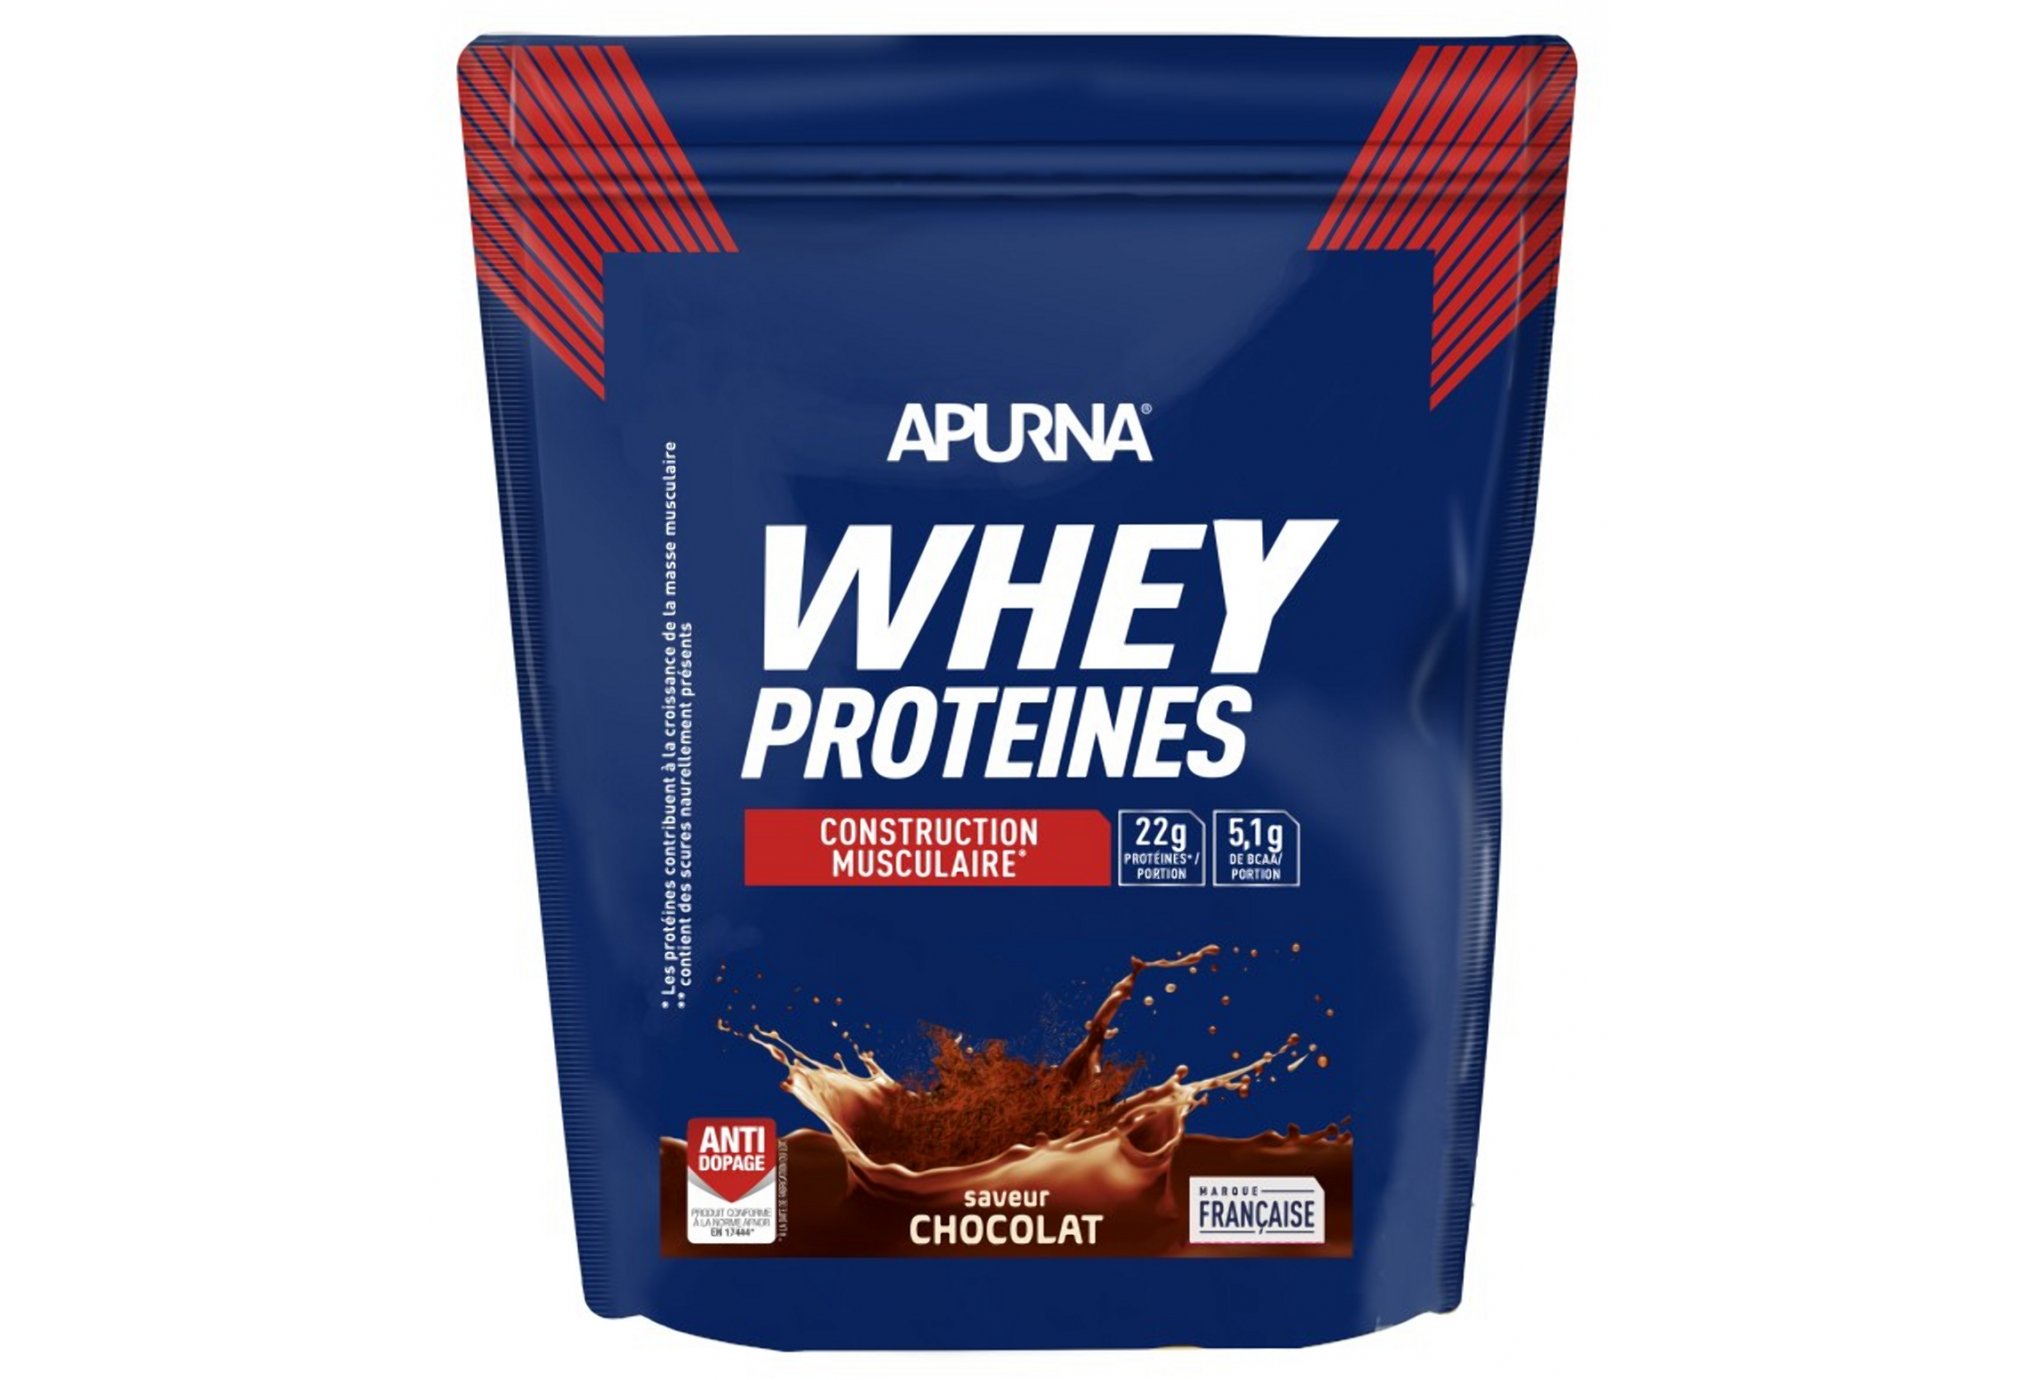 Apurna Whey protéines 720 g - Chocolat Diététique $scat.CAT_NOM